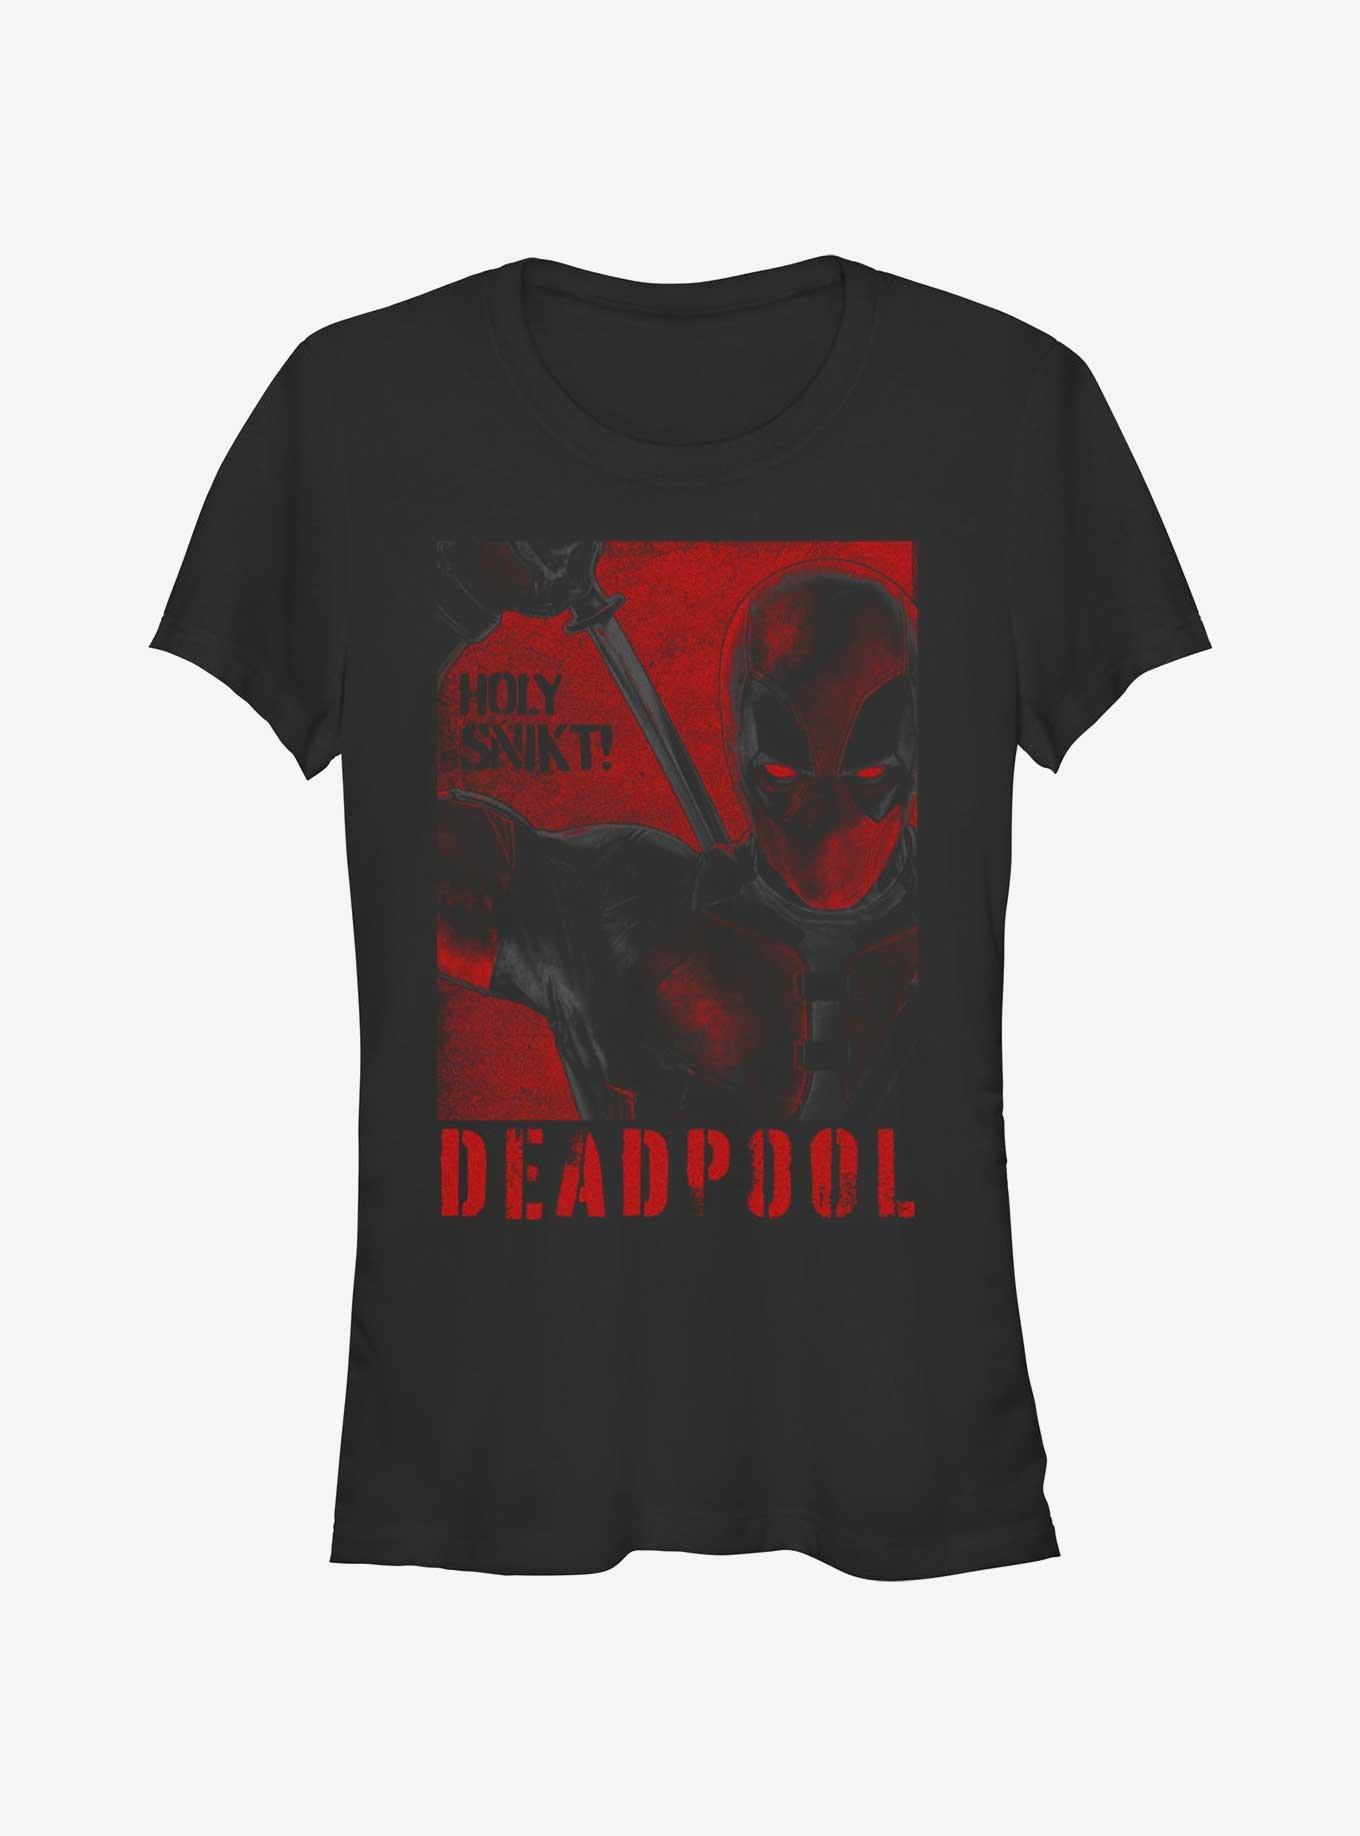 Marvel Deadpool & Wolverine Holy Snikt Deadpool Poster Girls T-Shirt Hot Topic Web Exclusive, BLACK, hi-res